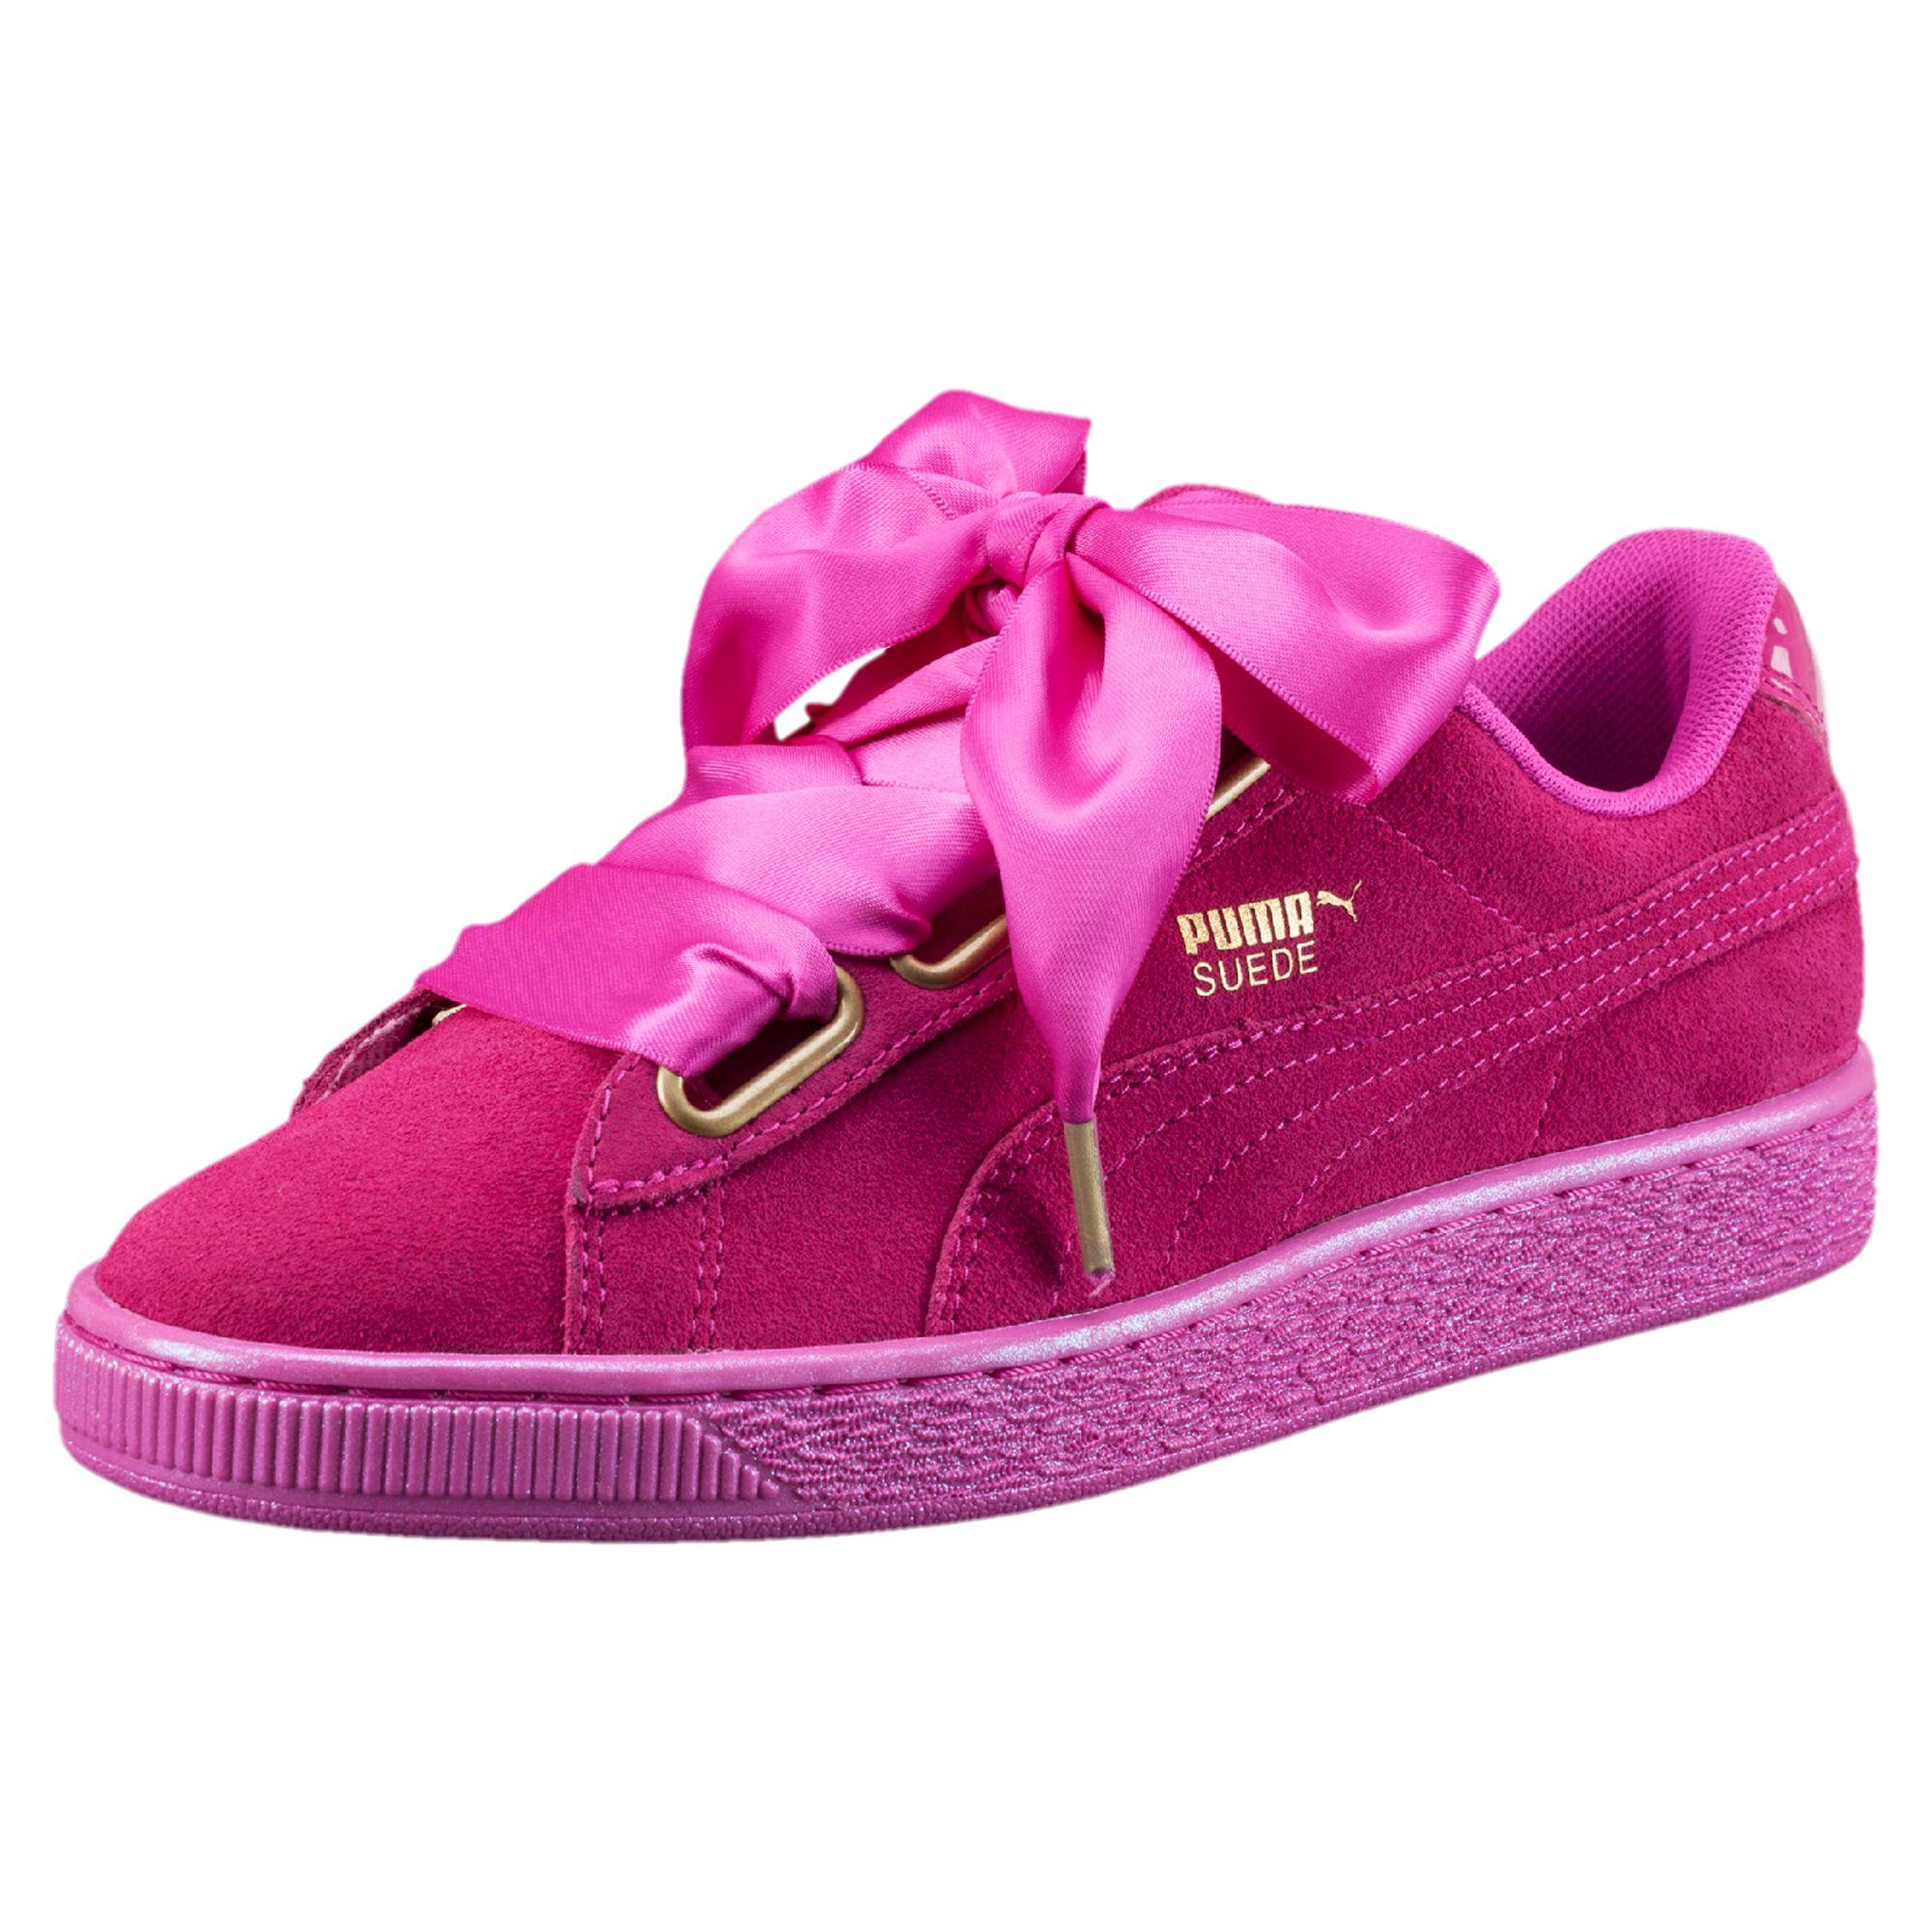 PUMA Suede Low-Top Sneakers in Ultra Magenta-Ultra Magenta (Pink) | Lyst